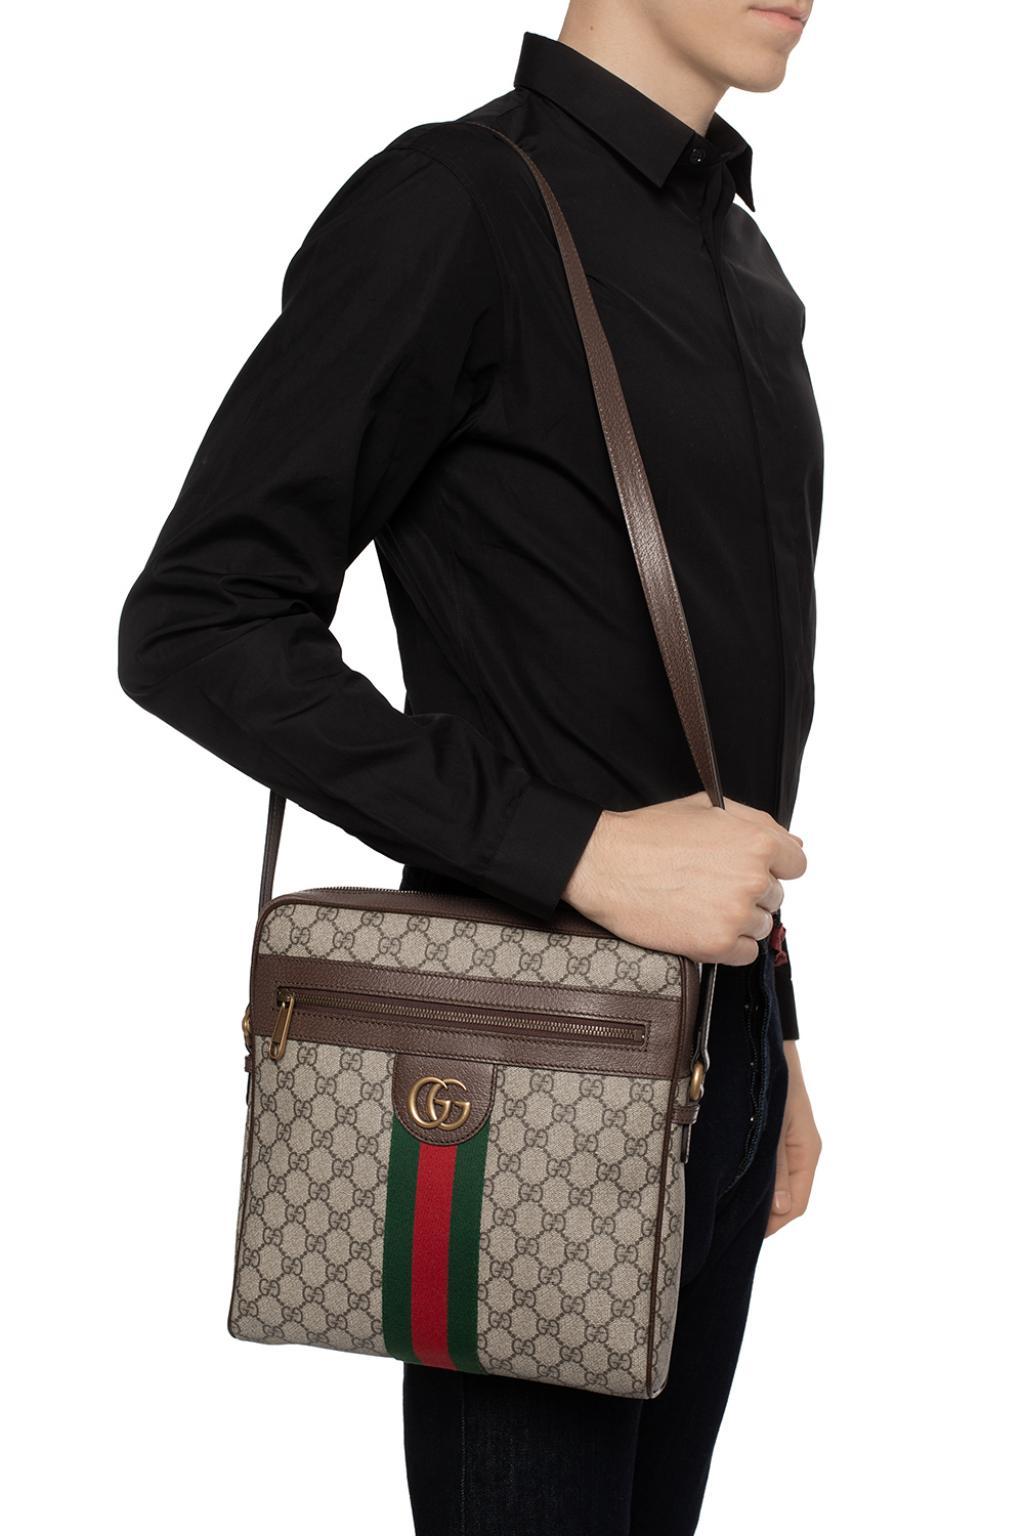 Gucci Ophidia GG Small Messenger Bag - Farfetch